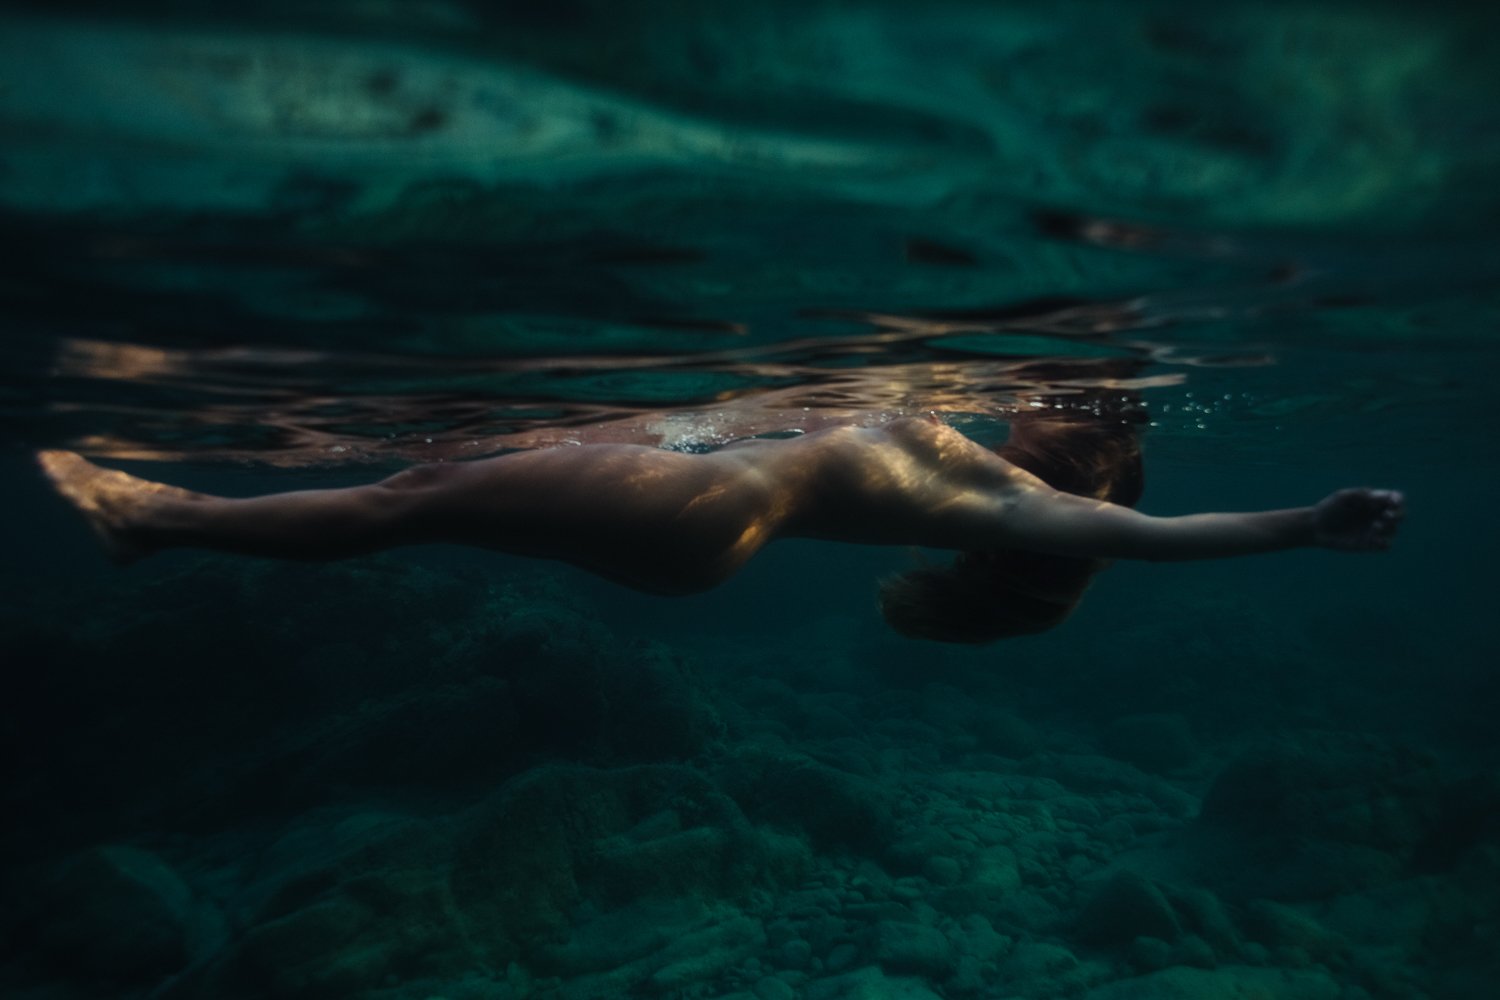 siren sirens corse corsica underwater photography photographe sous leau mermaid femme woman women nude nue fine art photography Krista Espino ajaccio sea Mediterranean france travel-28.jpg